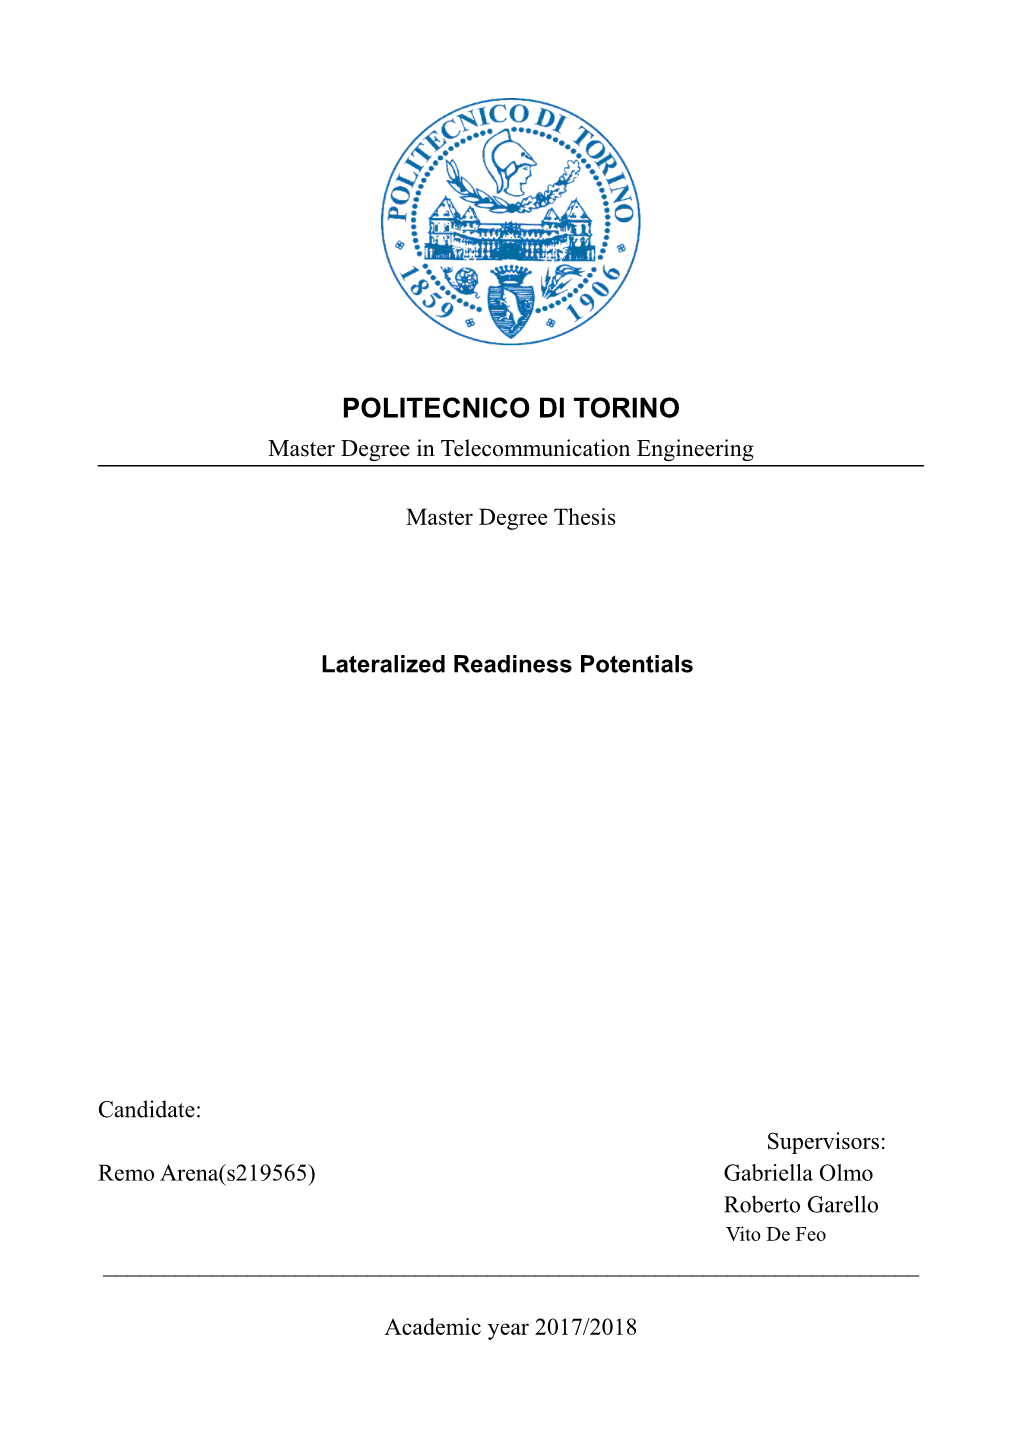 POLITECNICO DI TORINO Master Degree in Telecommunication Engineering